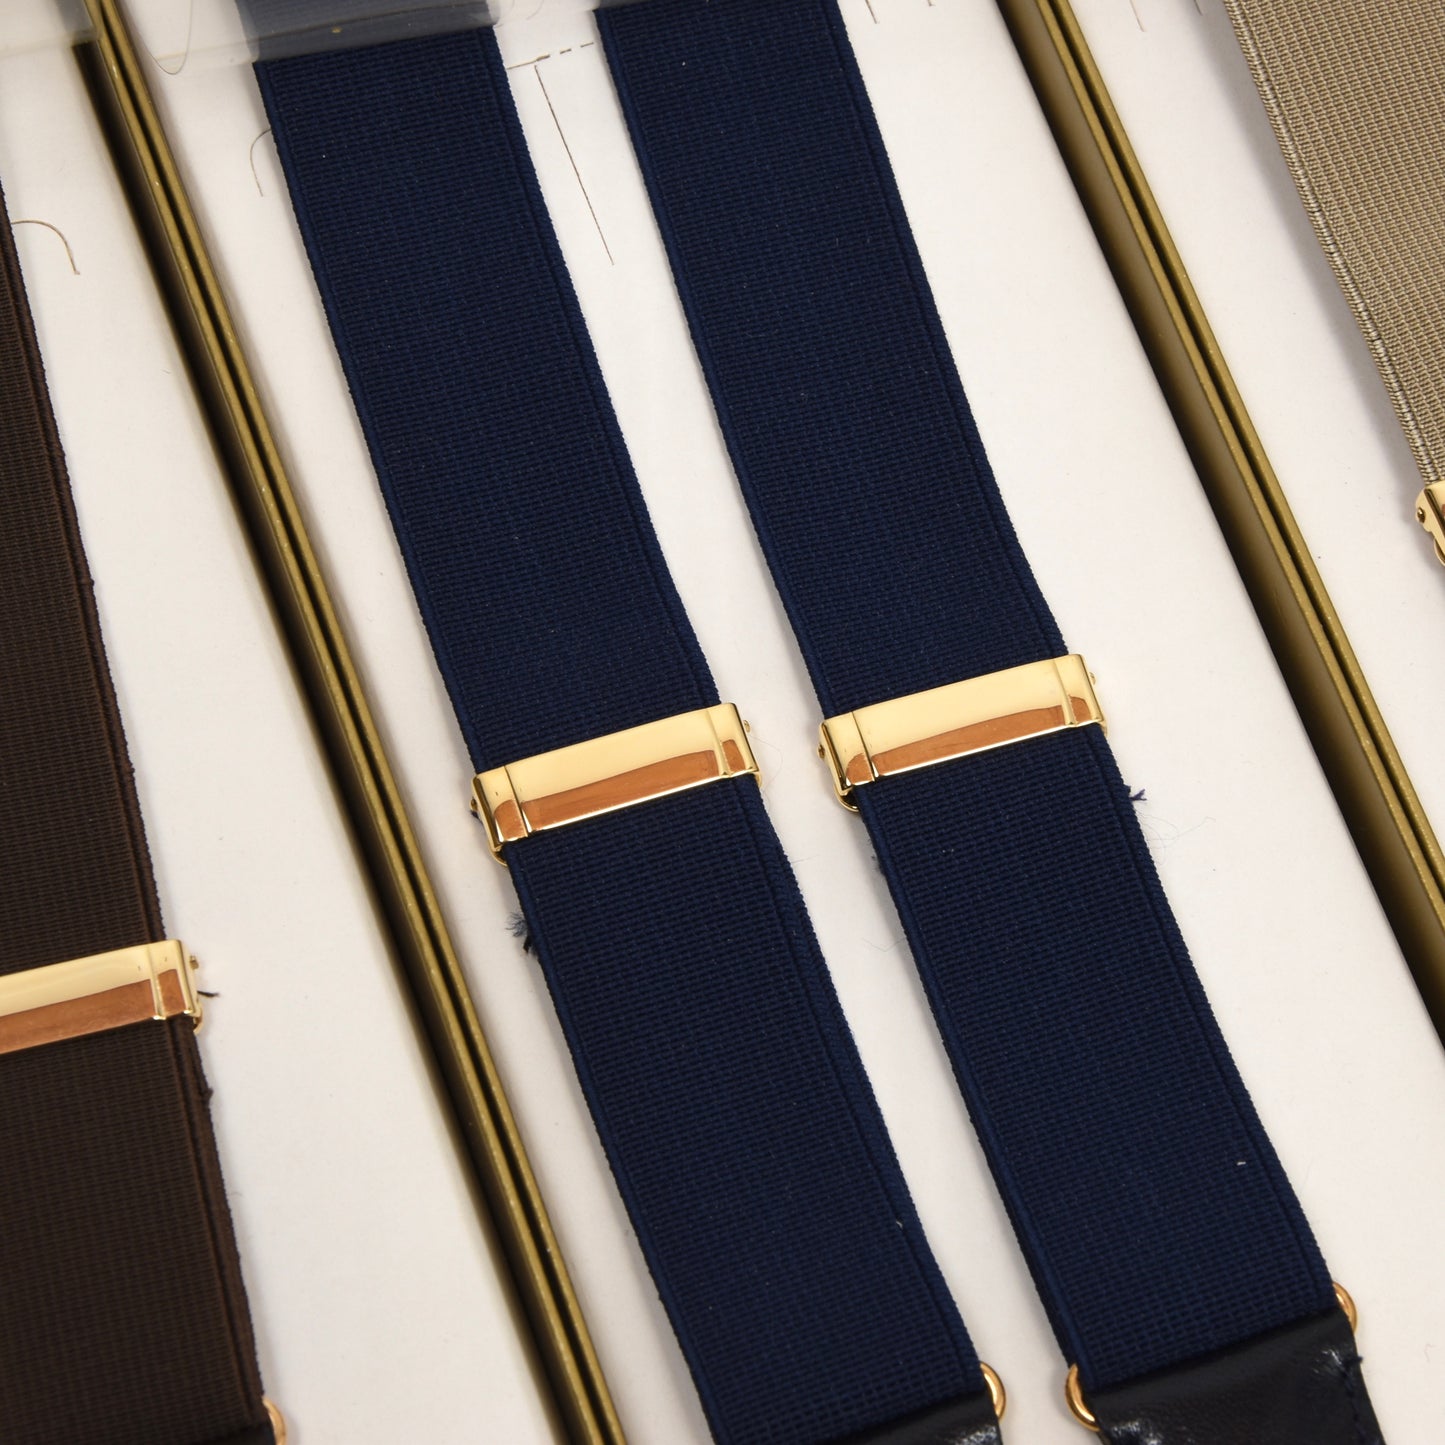 3 Pairs of Vintage L'Aiglon Braces/Suspenders Size 105 & 115 - Beige/Brown/Navy